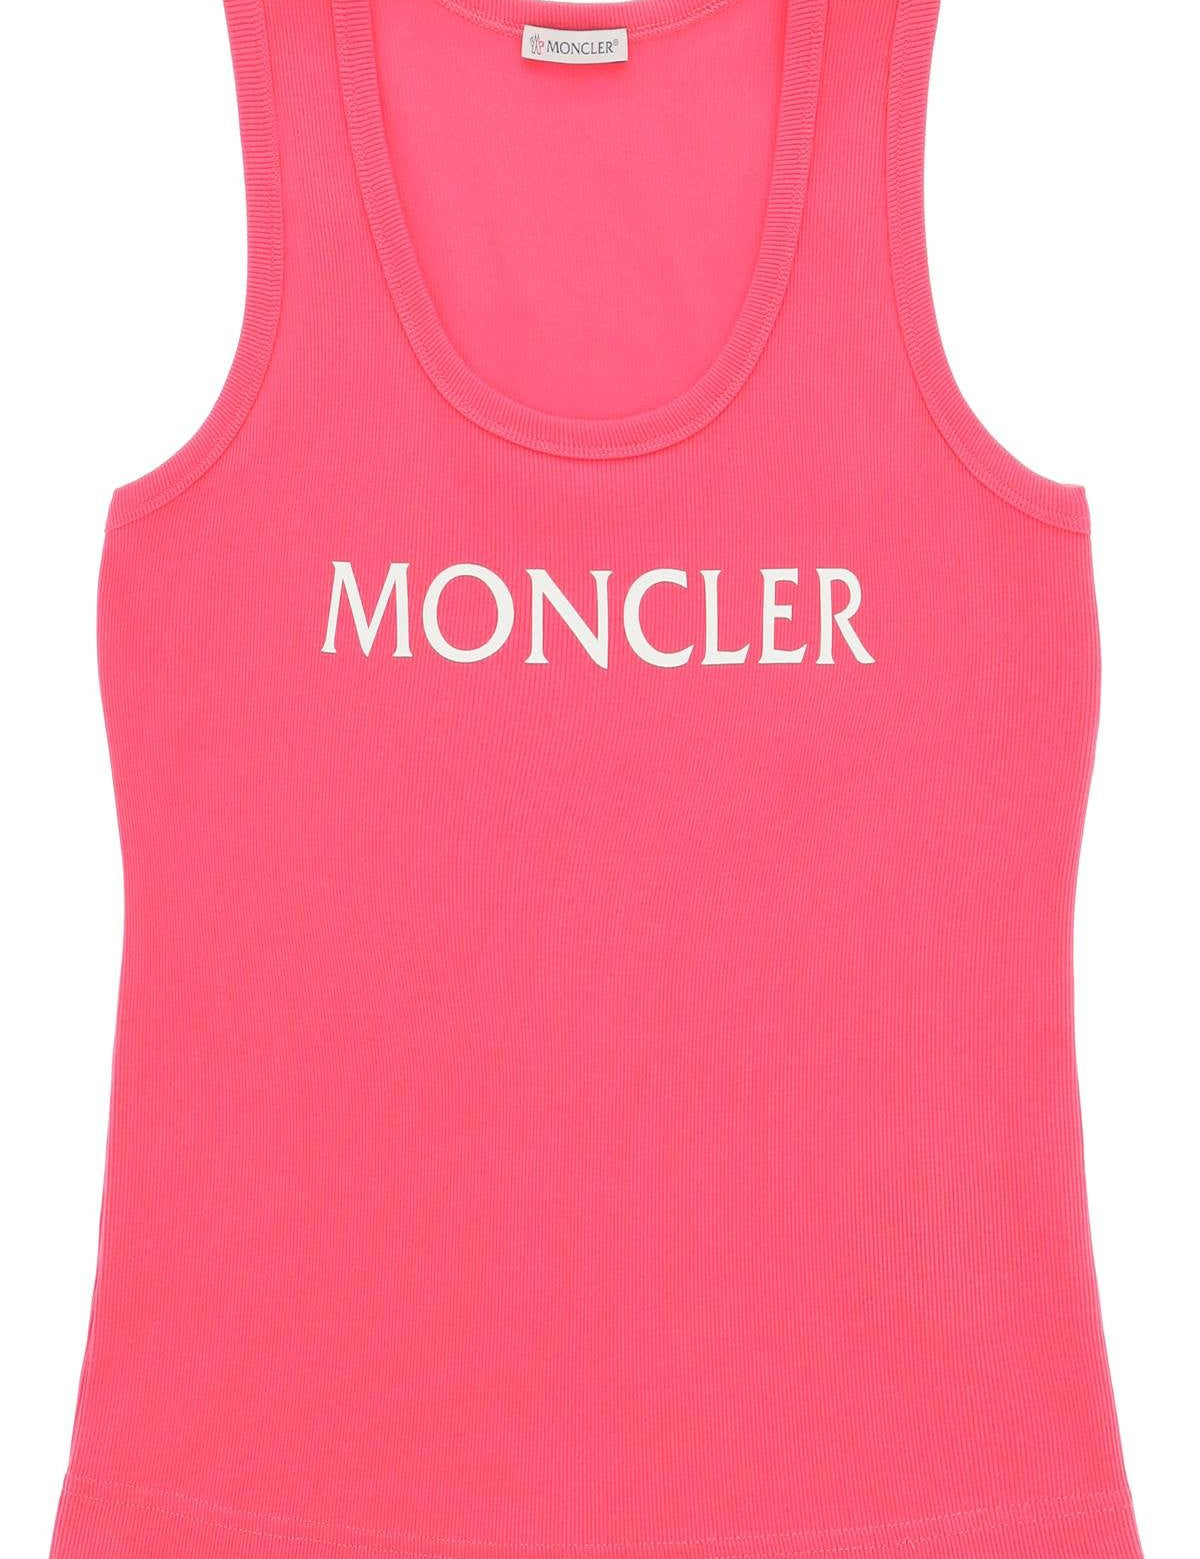 moncler-basic-logo-print-ribbed-tank-top_52ec7140-7391-474d-a763-4f355b197a86.jpg